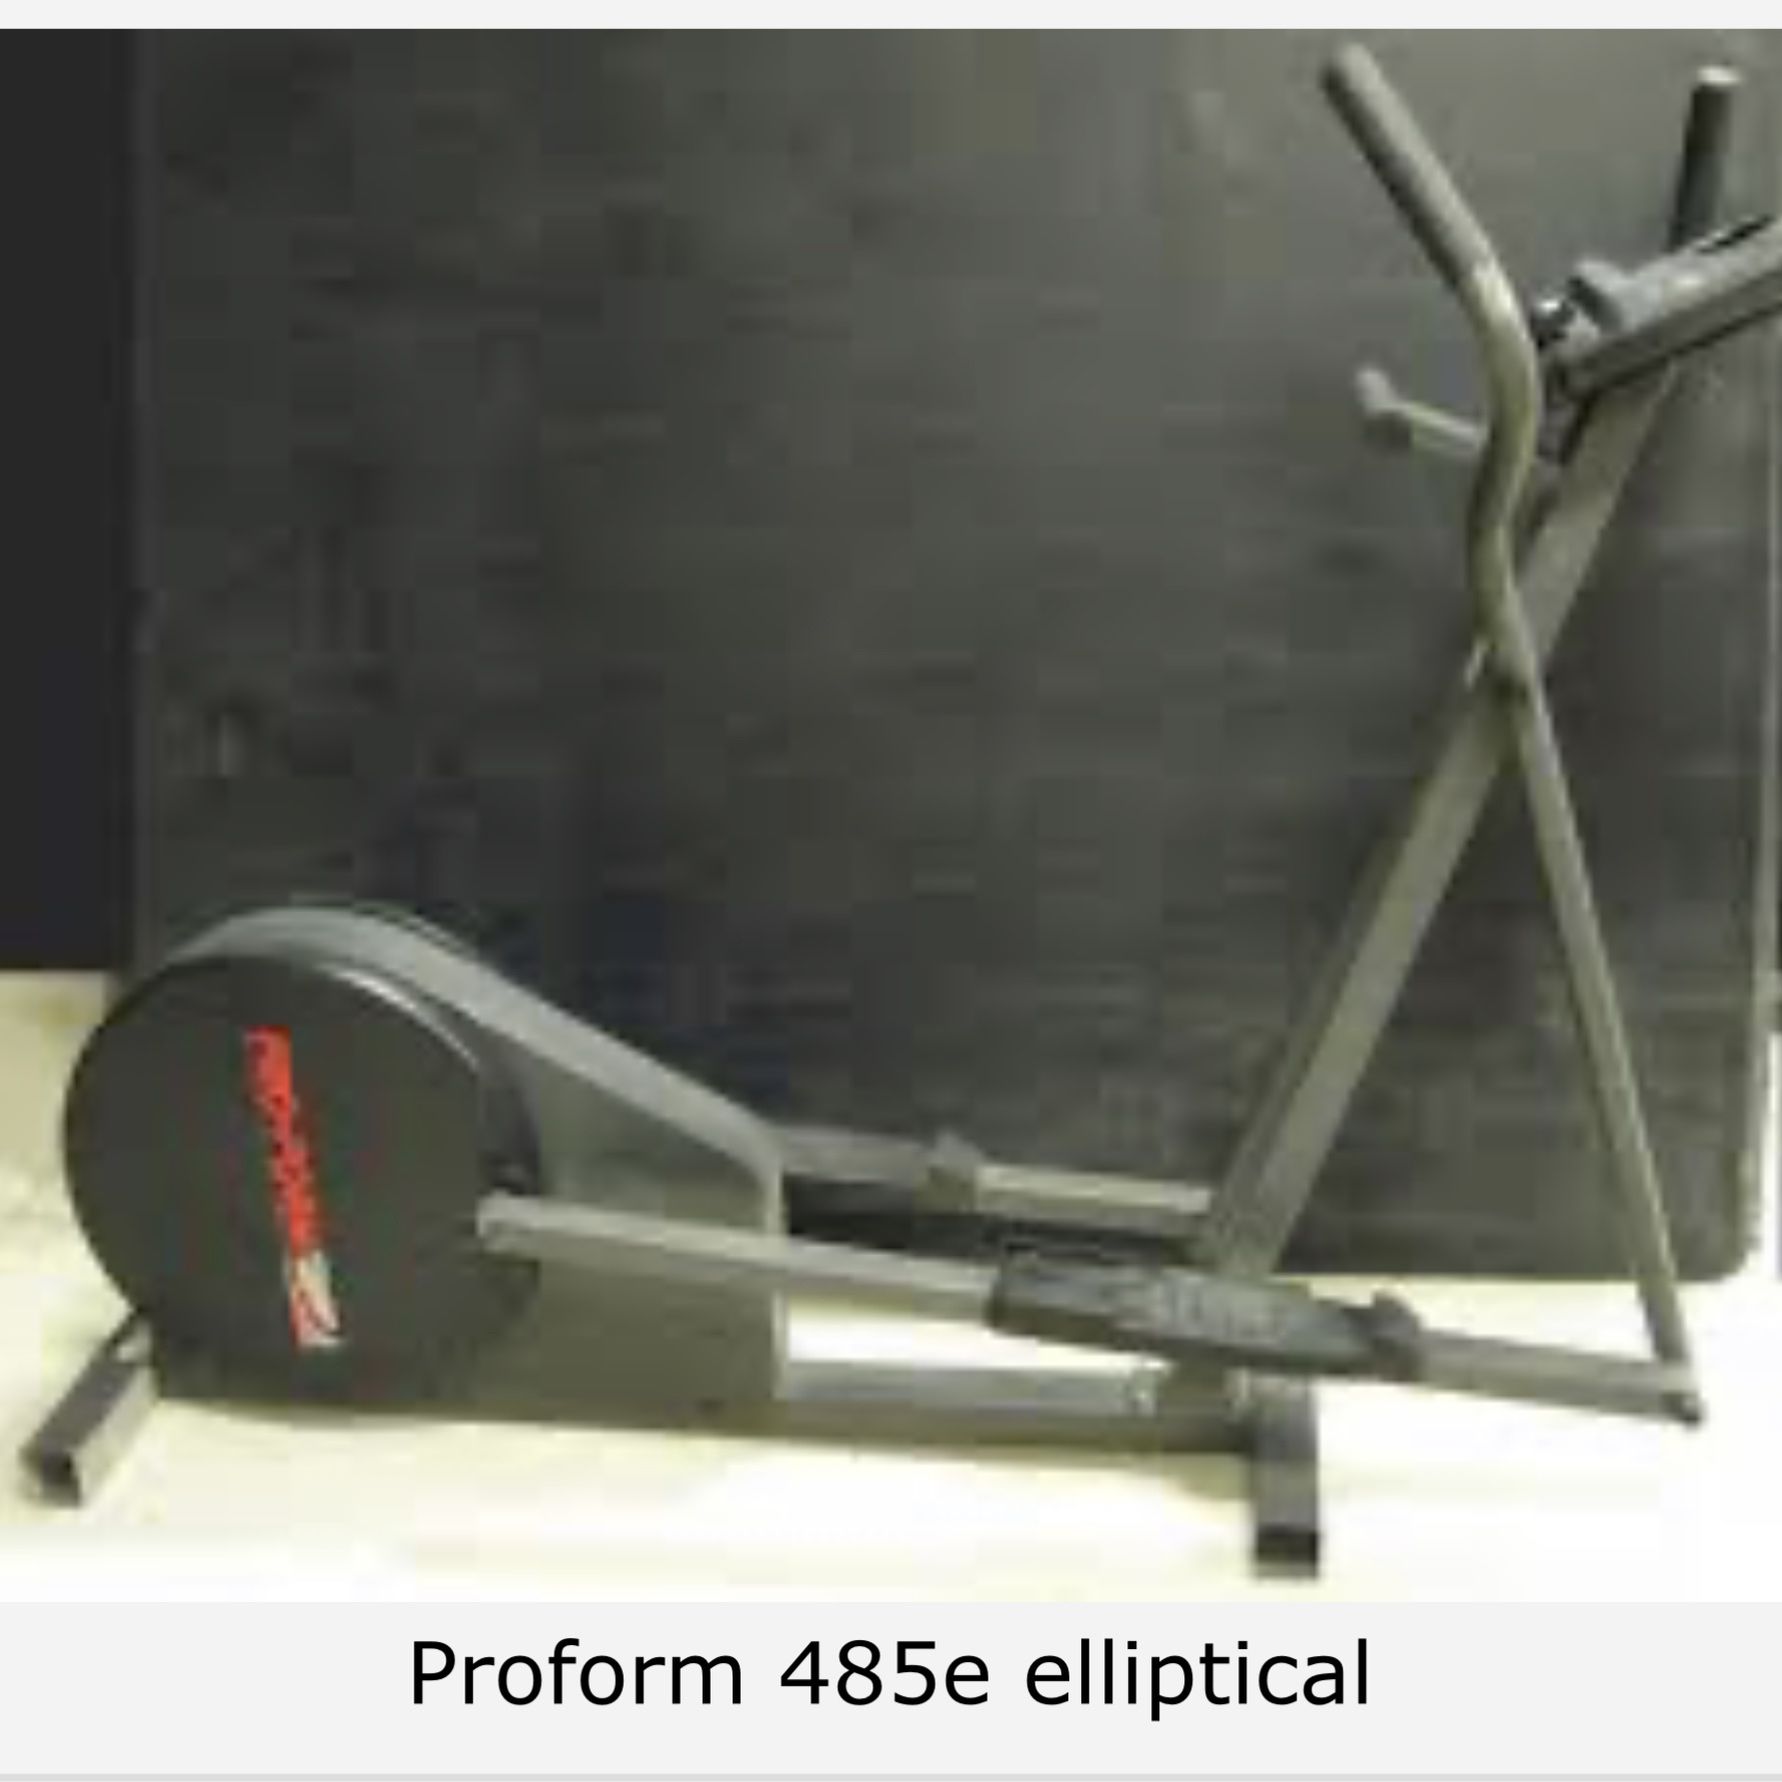 Pro-Form Elliptical Exerciser 485e